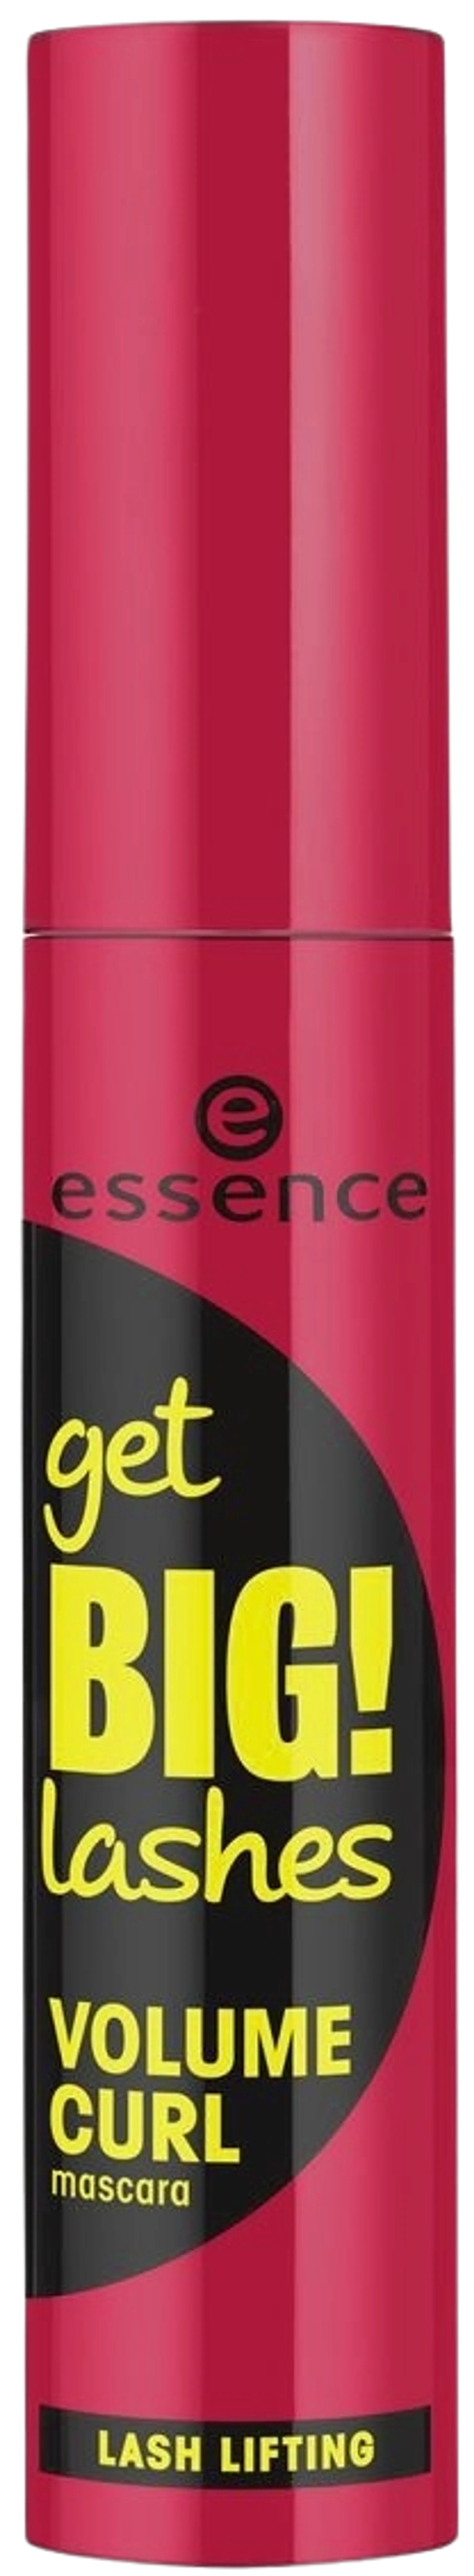 essence get BIG! lashes VOLUME CURL mascara 12 ml - 2